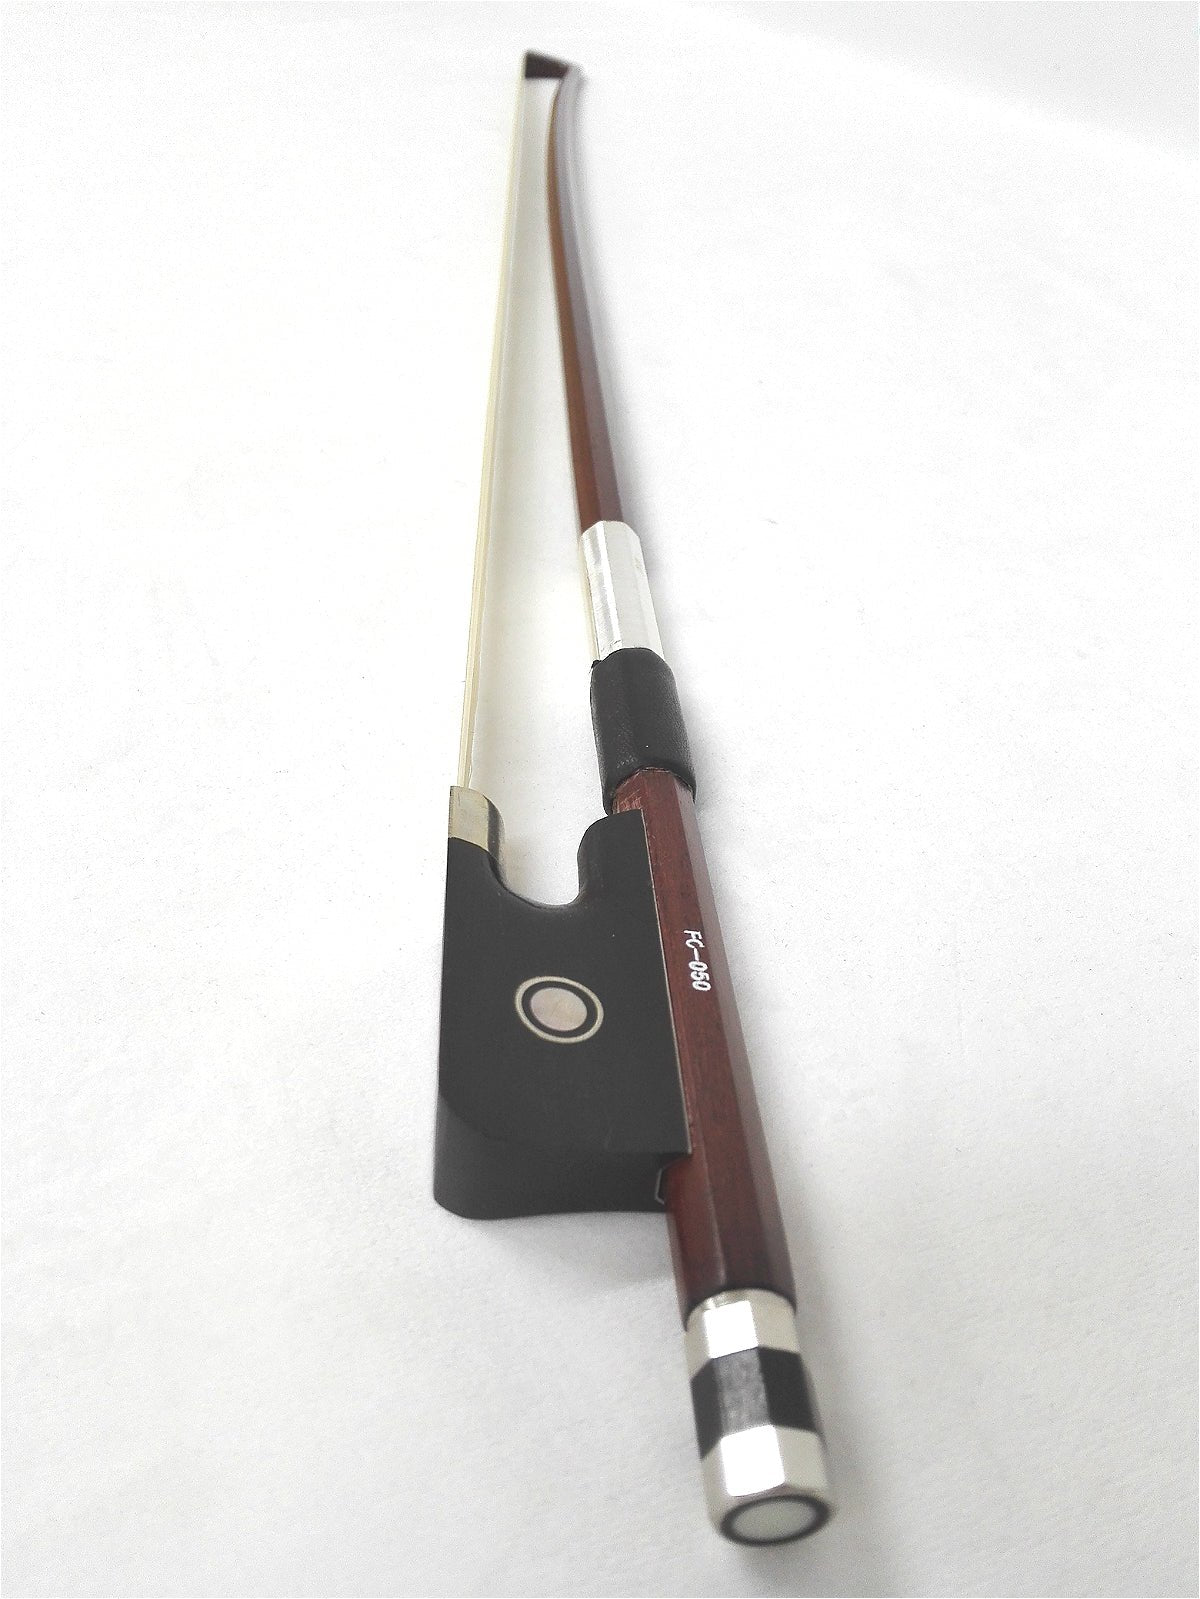 Symphony FC050 1/4 Size Cello Bow, Brazil-wood, Octagonal Stick, Real Horse Hair